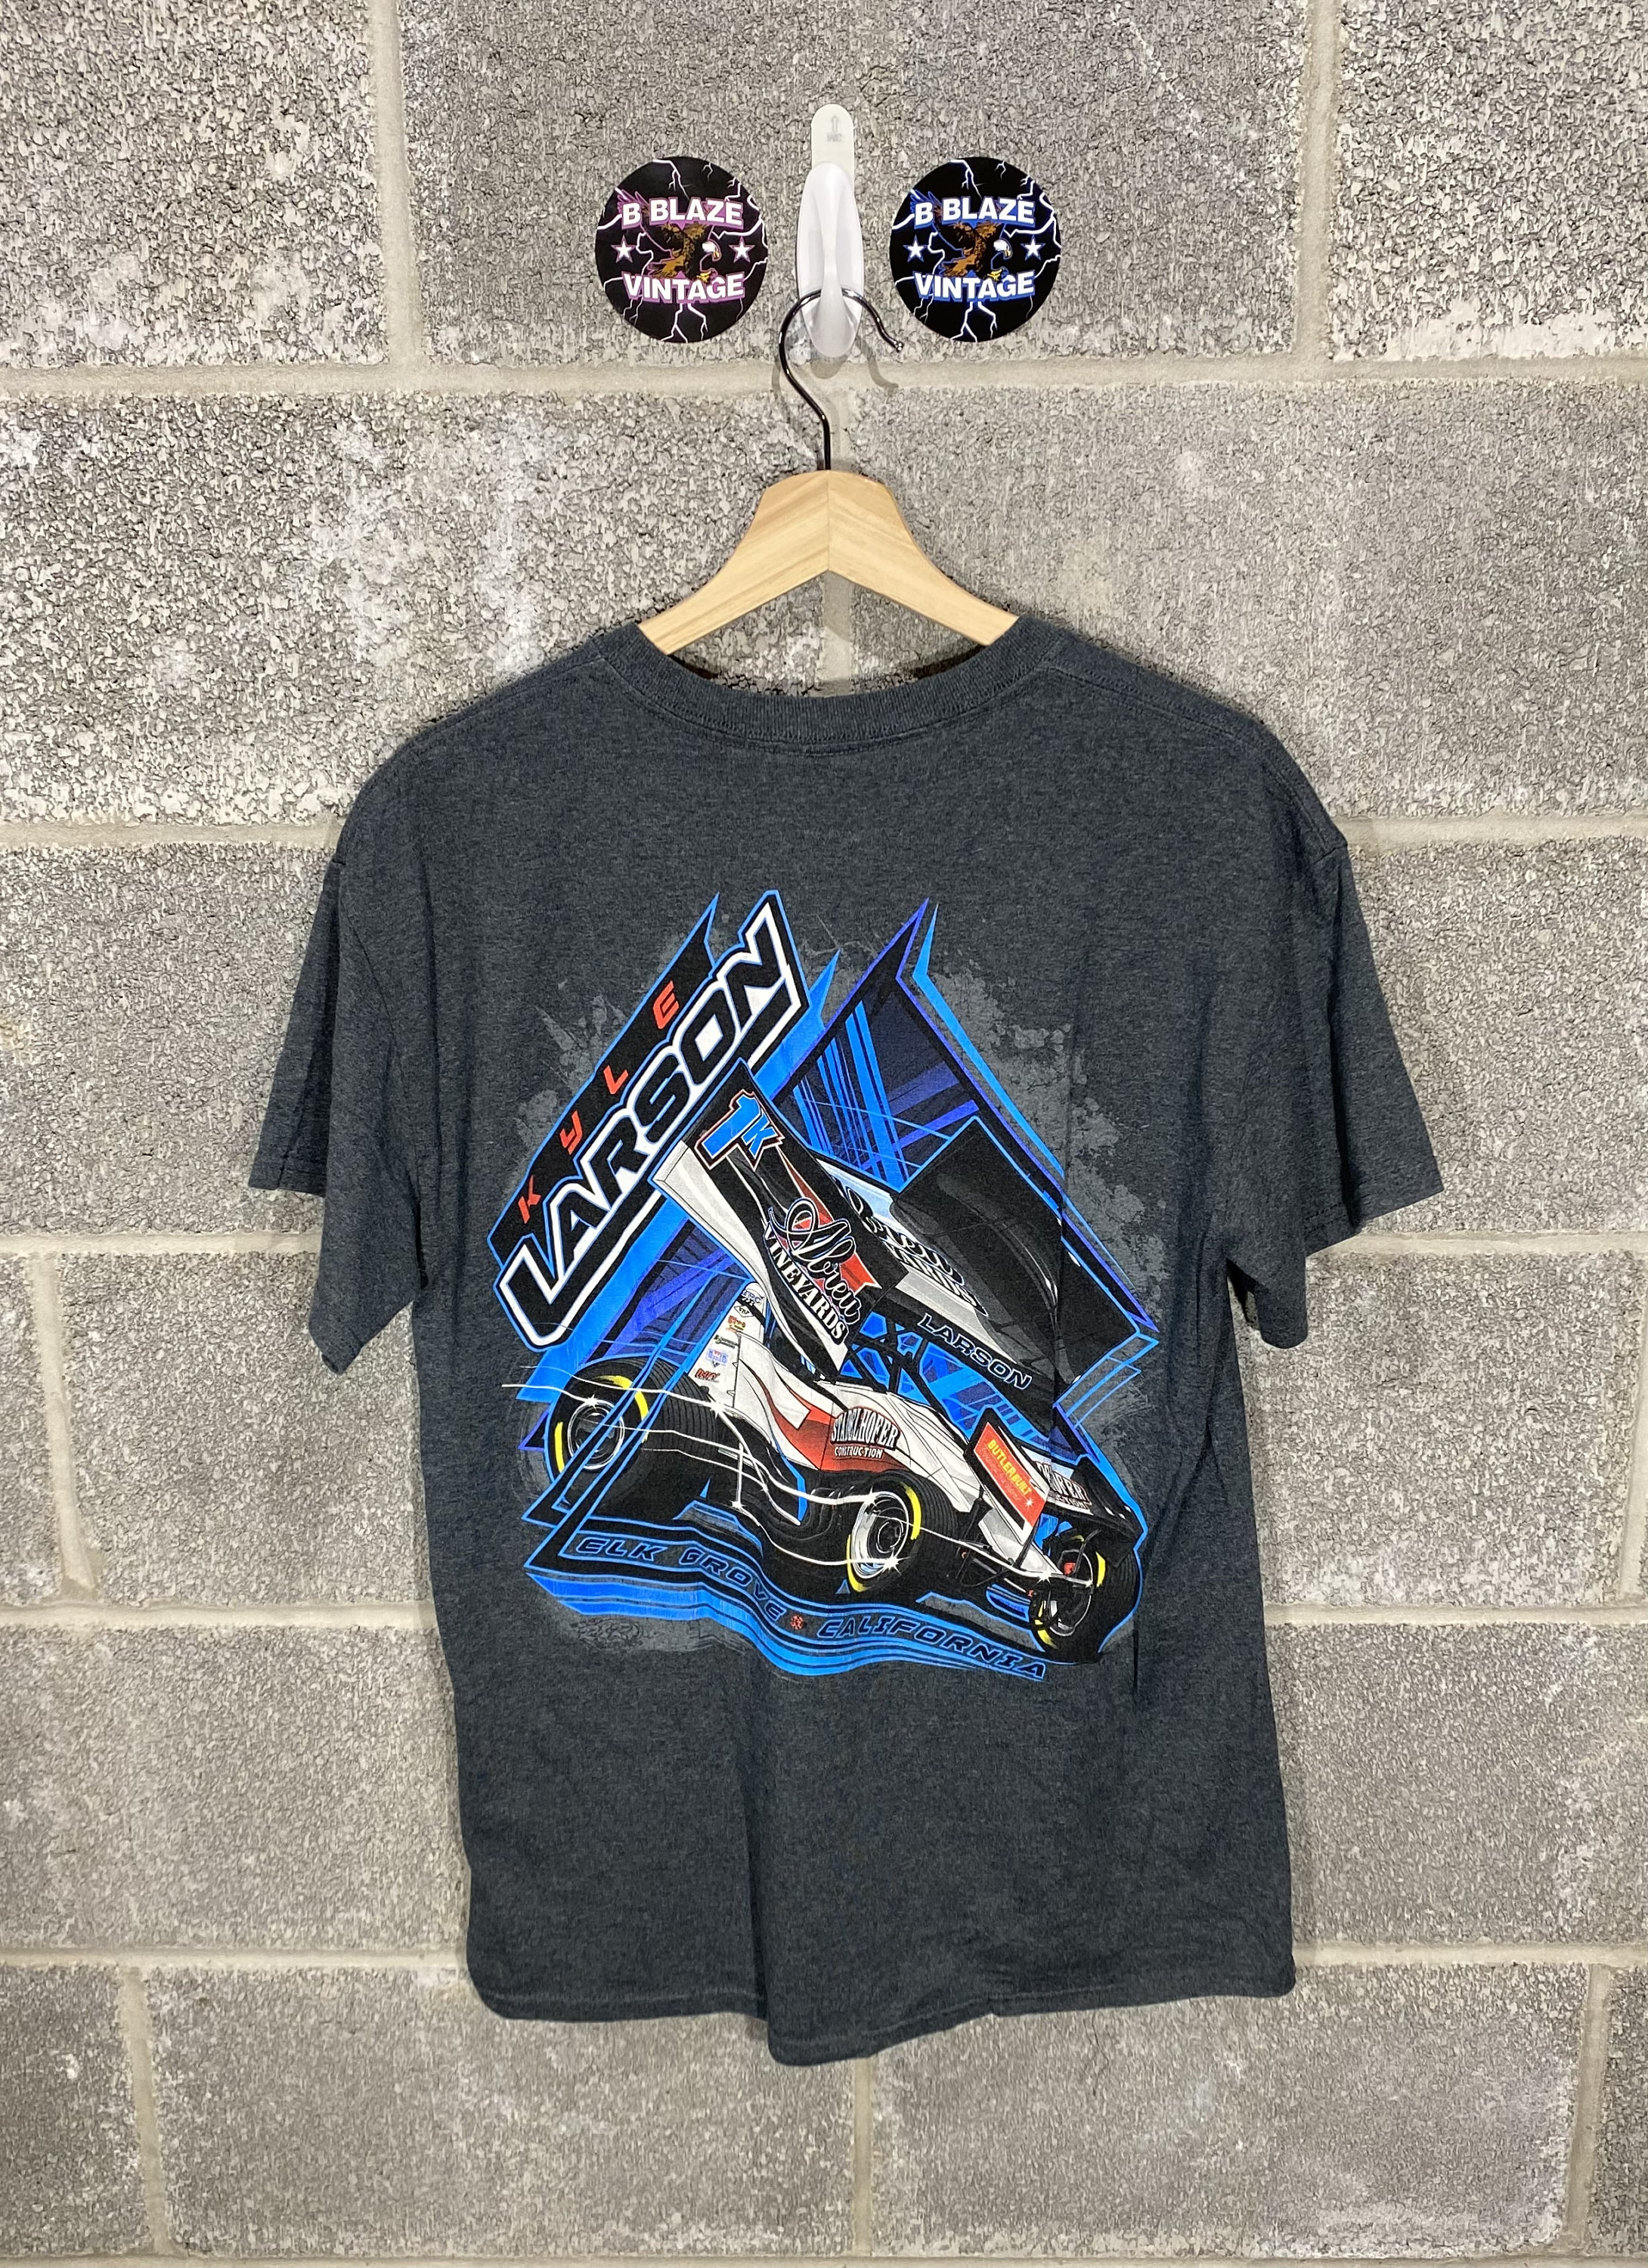 Kyle Larson Abreu Vineyards Sprint Car Dirt Track Racing Graphic T-Shirt